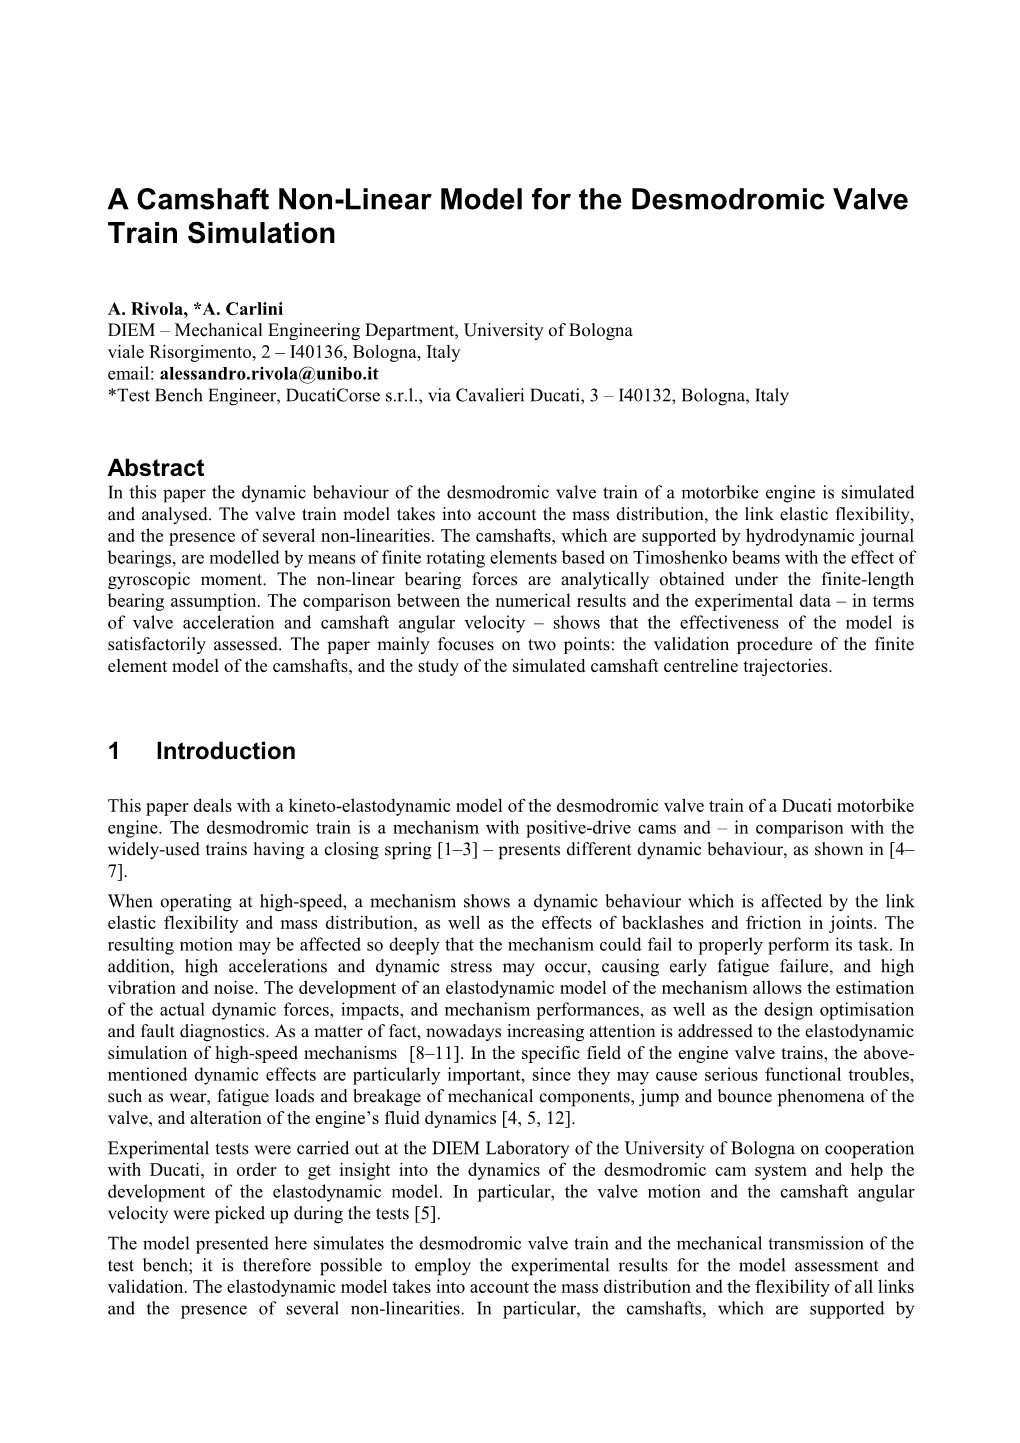 A Camshaft Non-Linear Model for the Desmodromic Valve Train Simulation